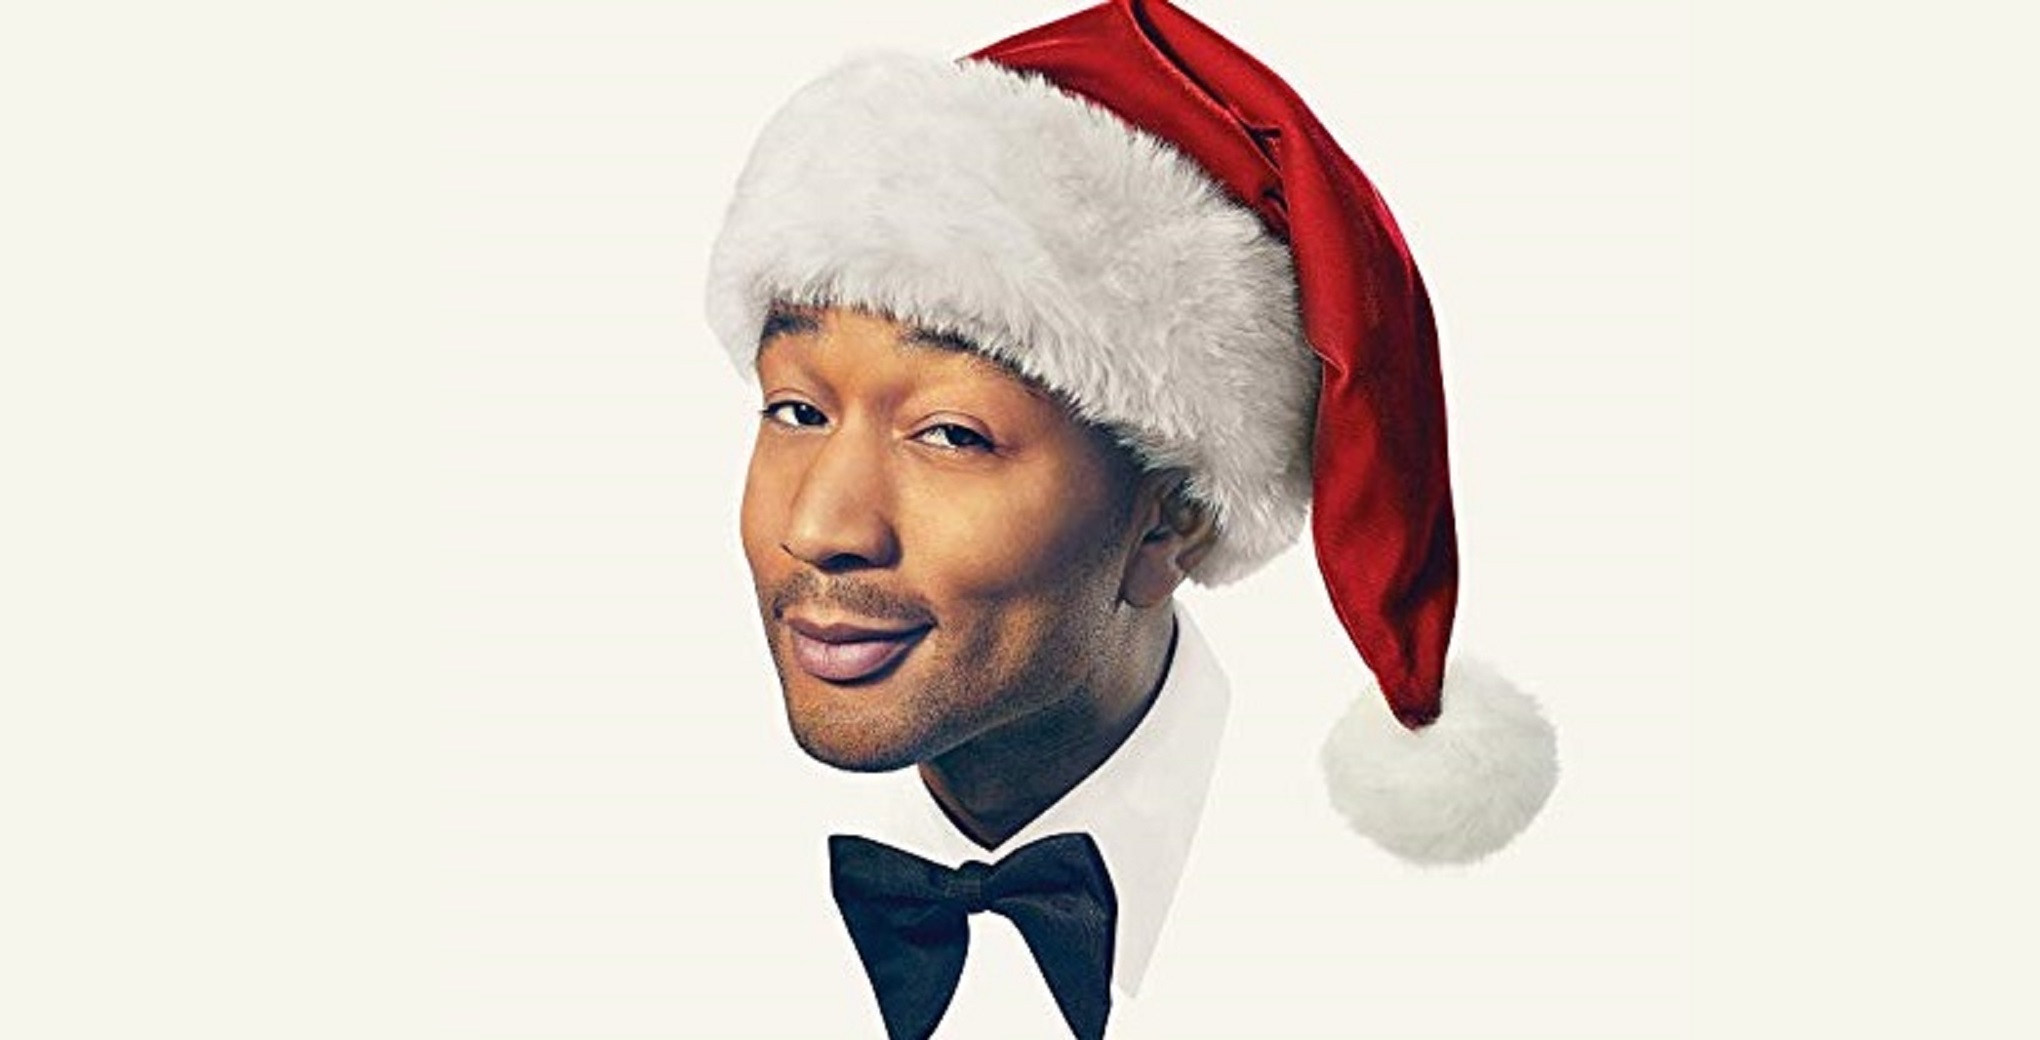 Watch: John Legend Brings Holiday Spirit with ‘Bring Me Love’ Performance on Ellen!